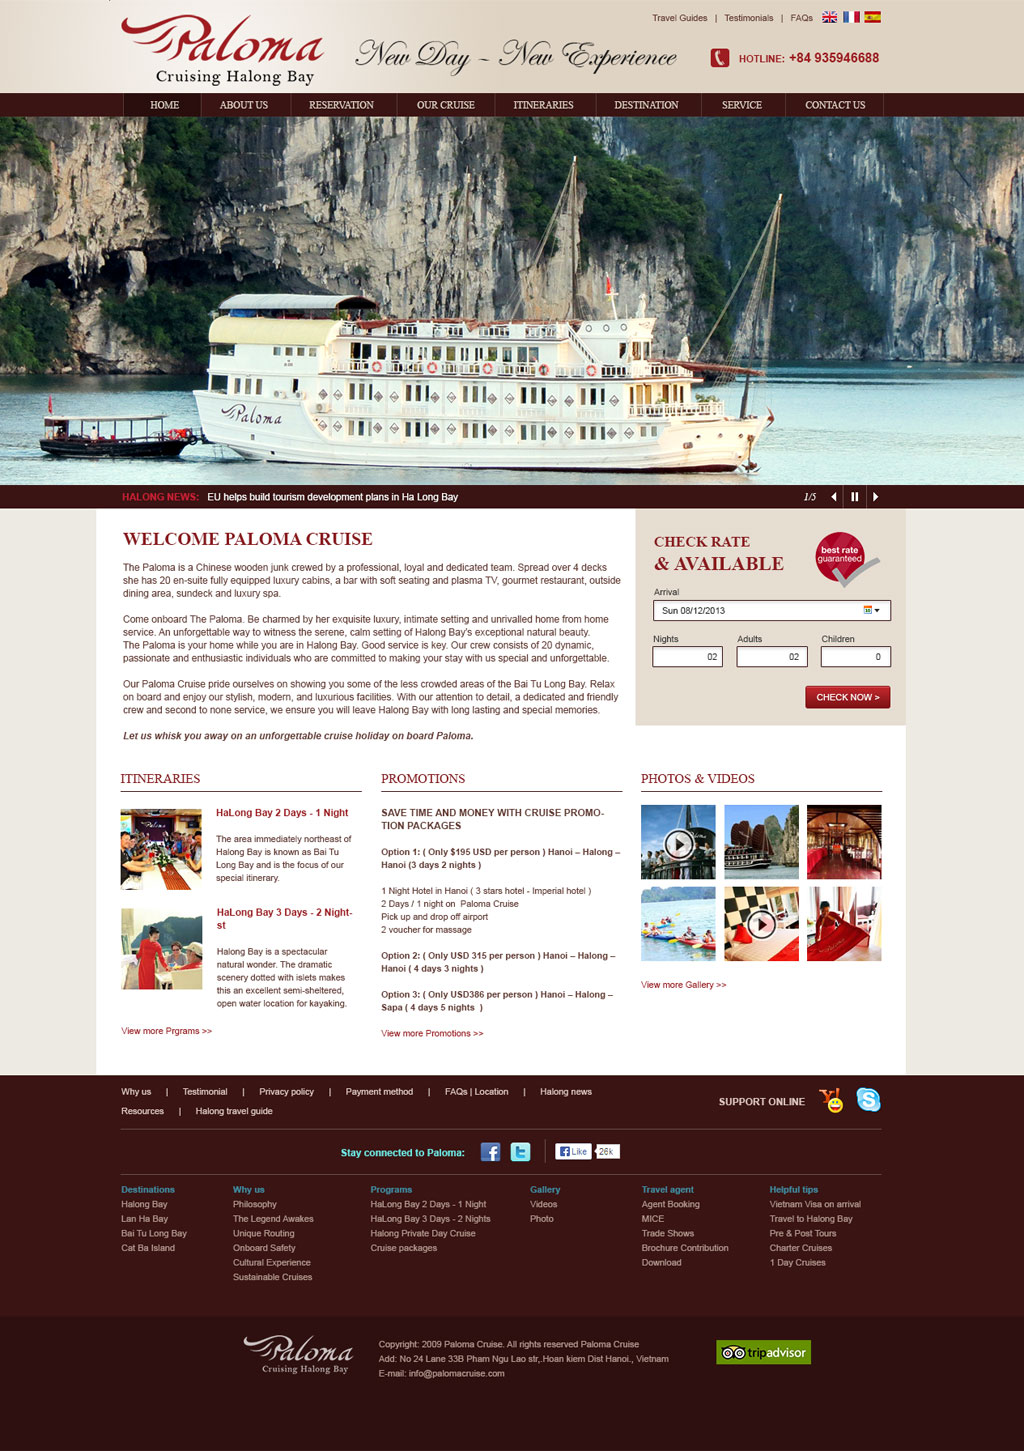 Thiết kế website khách sạn palo